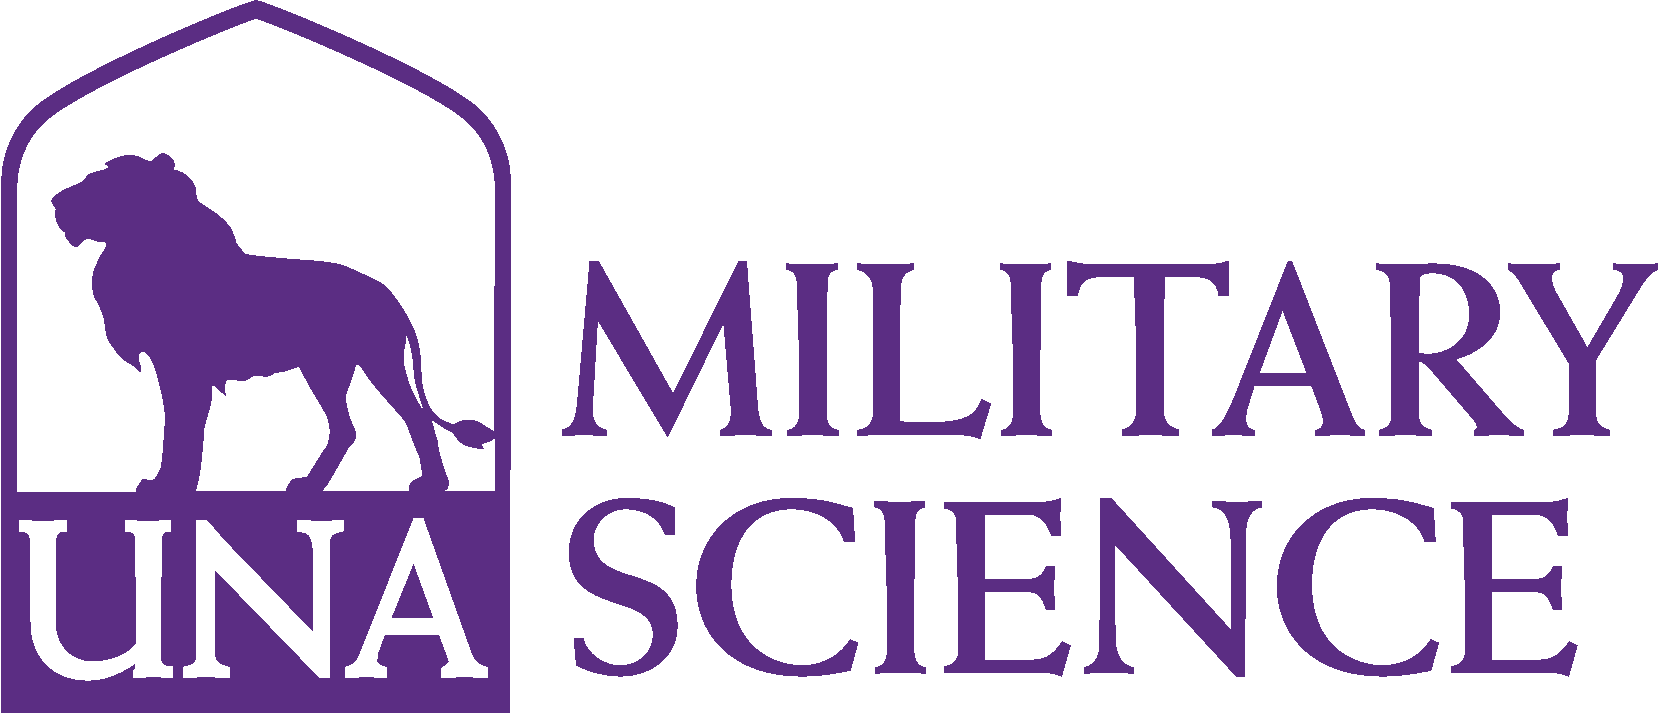 Military Science logo 3